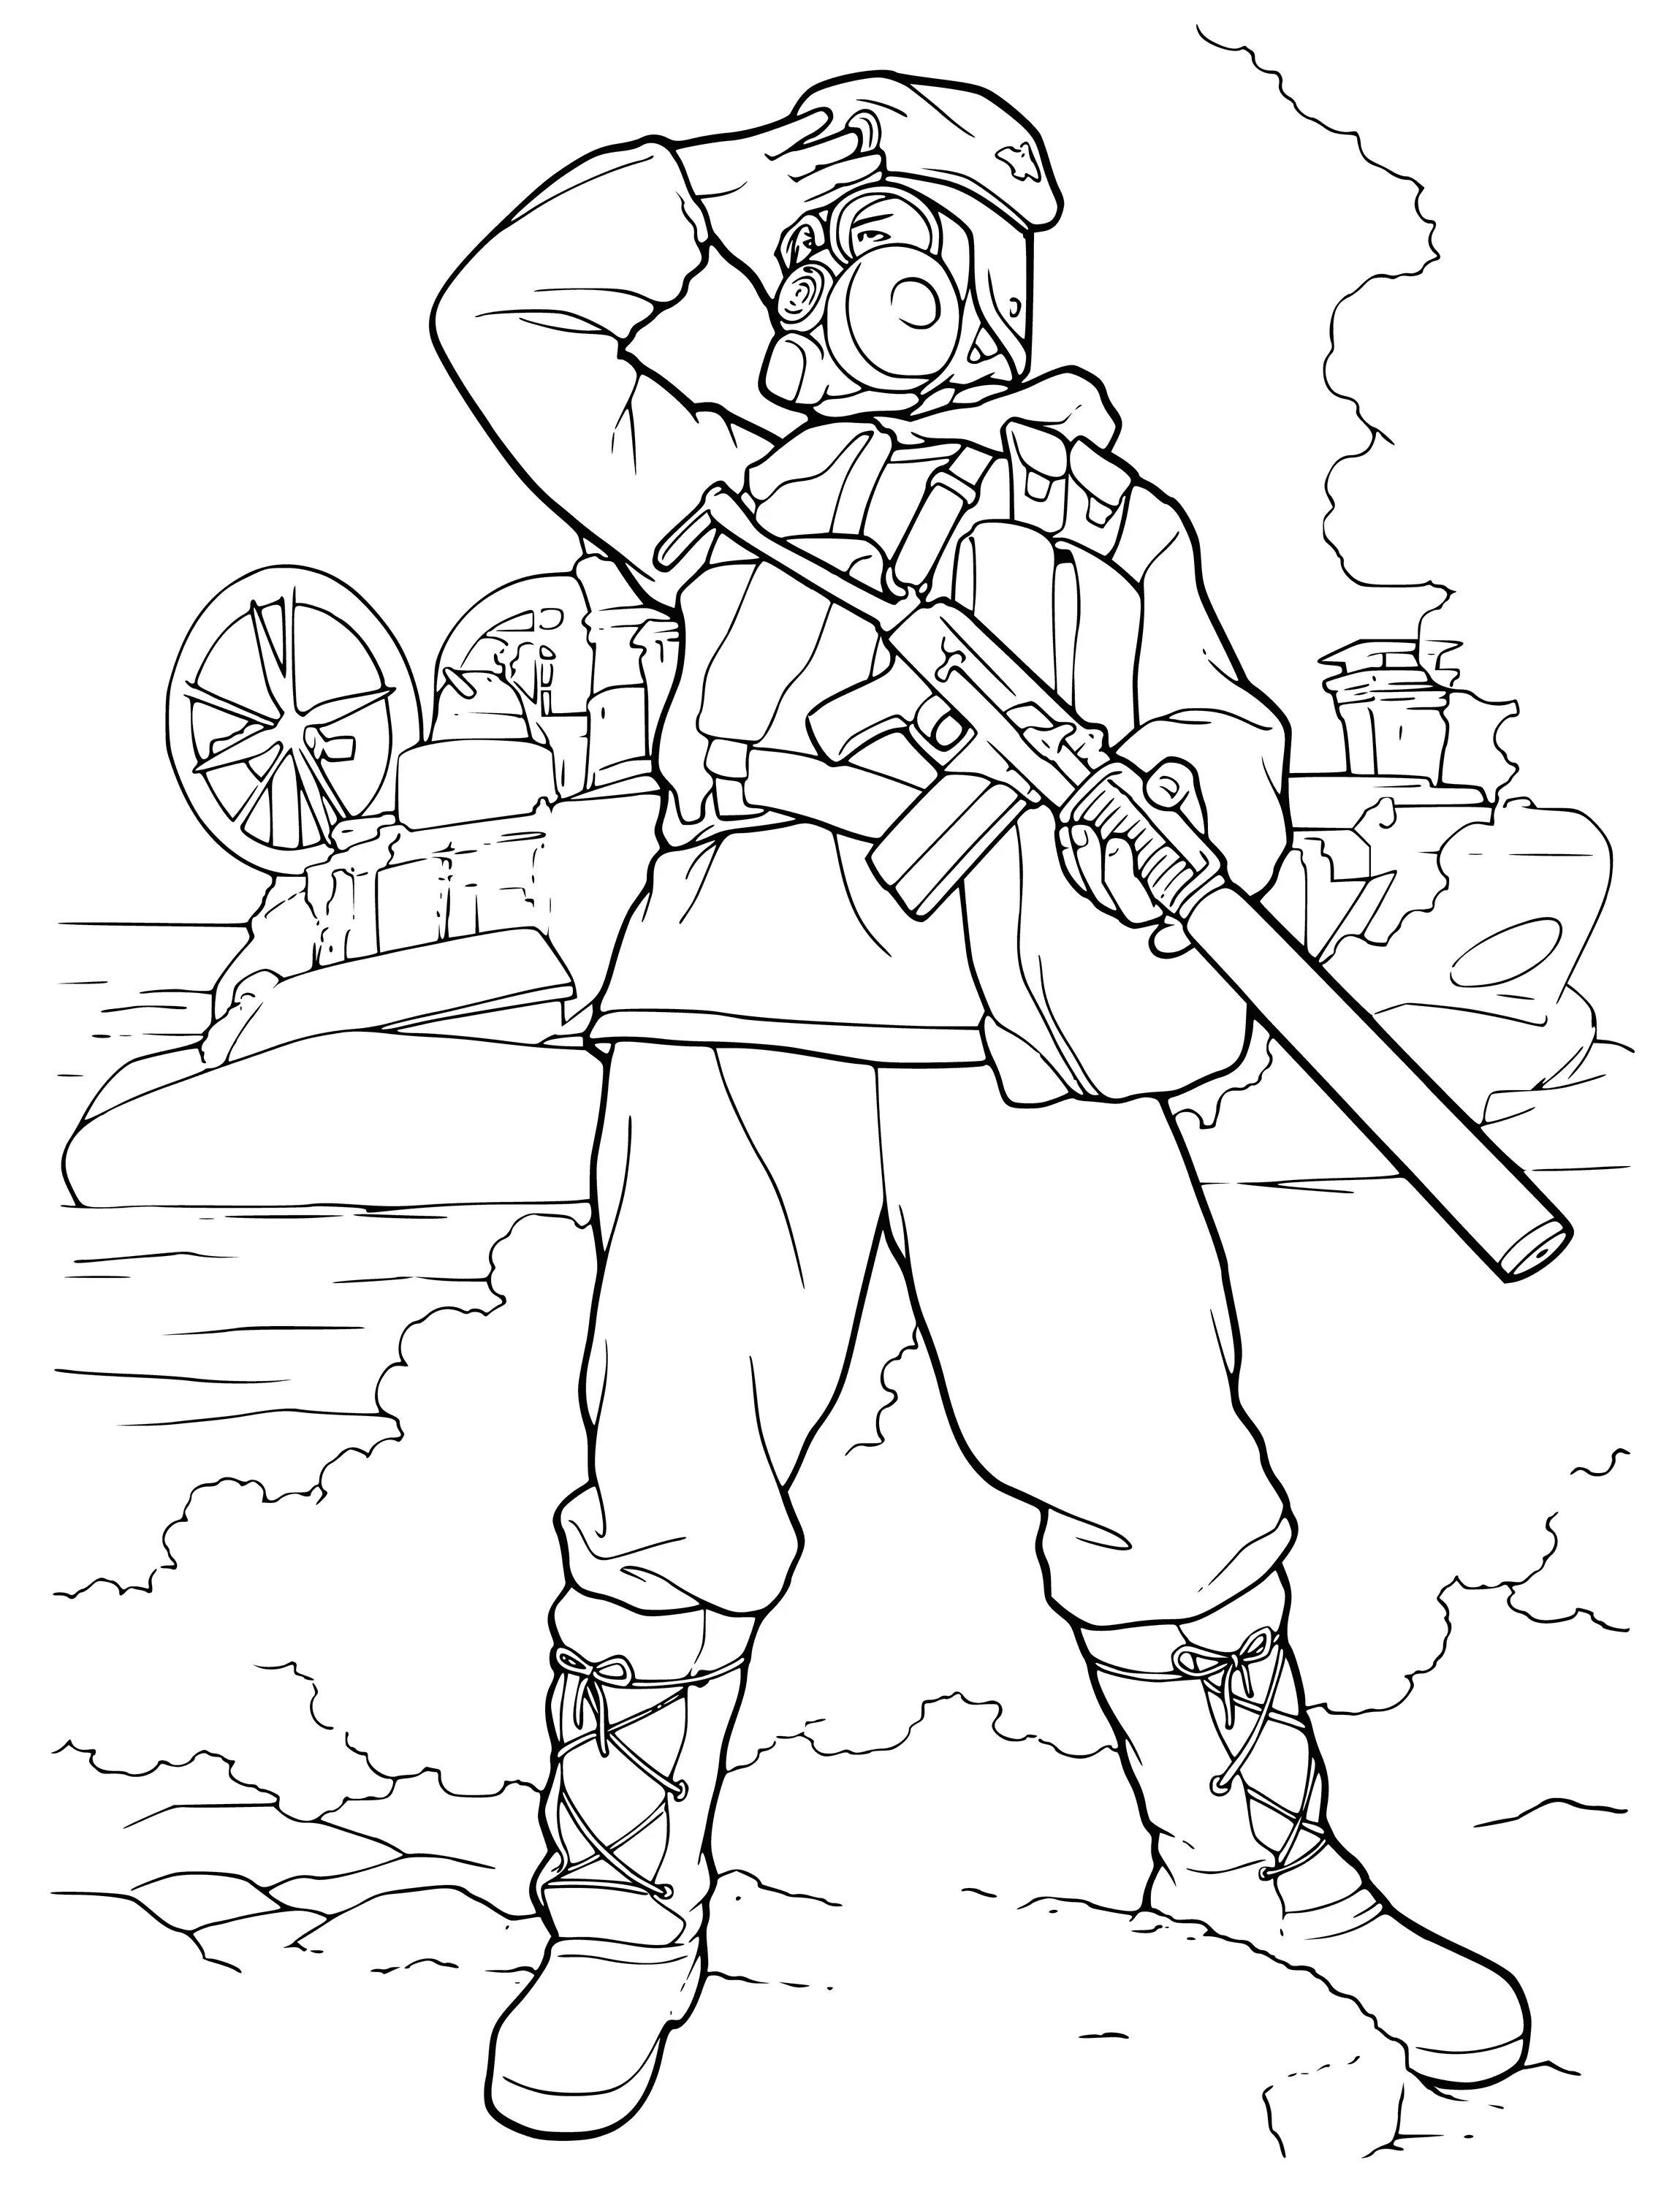 Coloring glamorous hero soldier